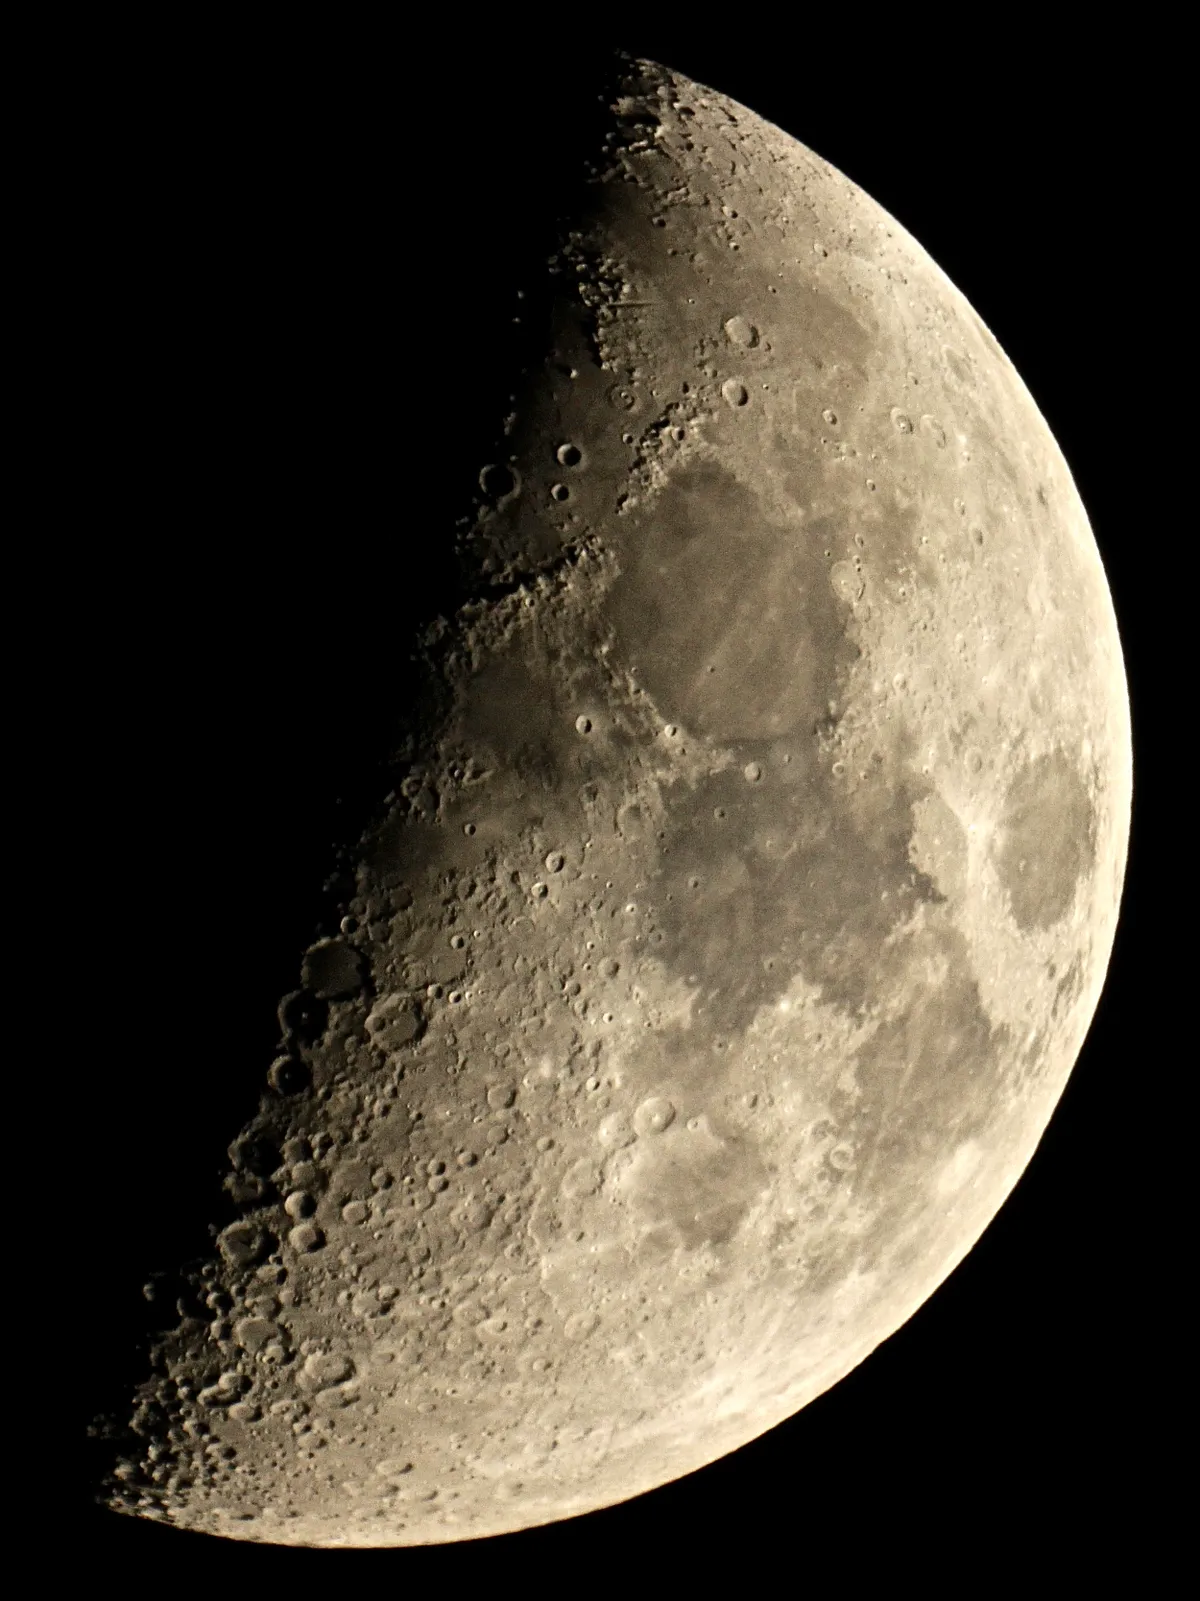 First Quarter Moon by Sarah & Simon Fisher, Bromsgrove, Worcestershire, UK. Equipment: Canon 600D, Mak 127mm telescope